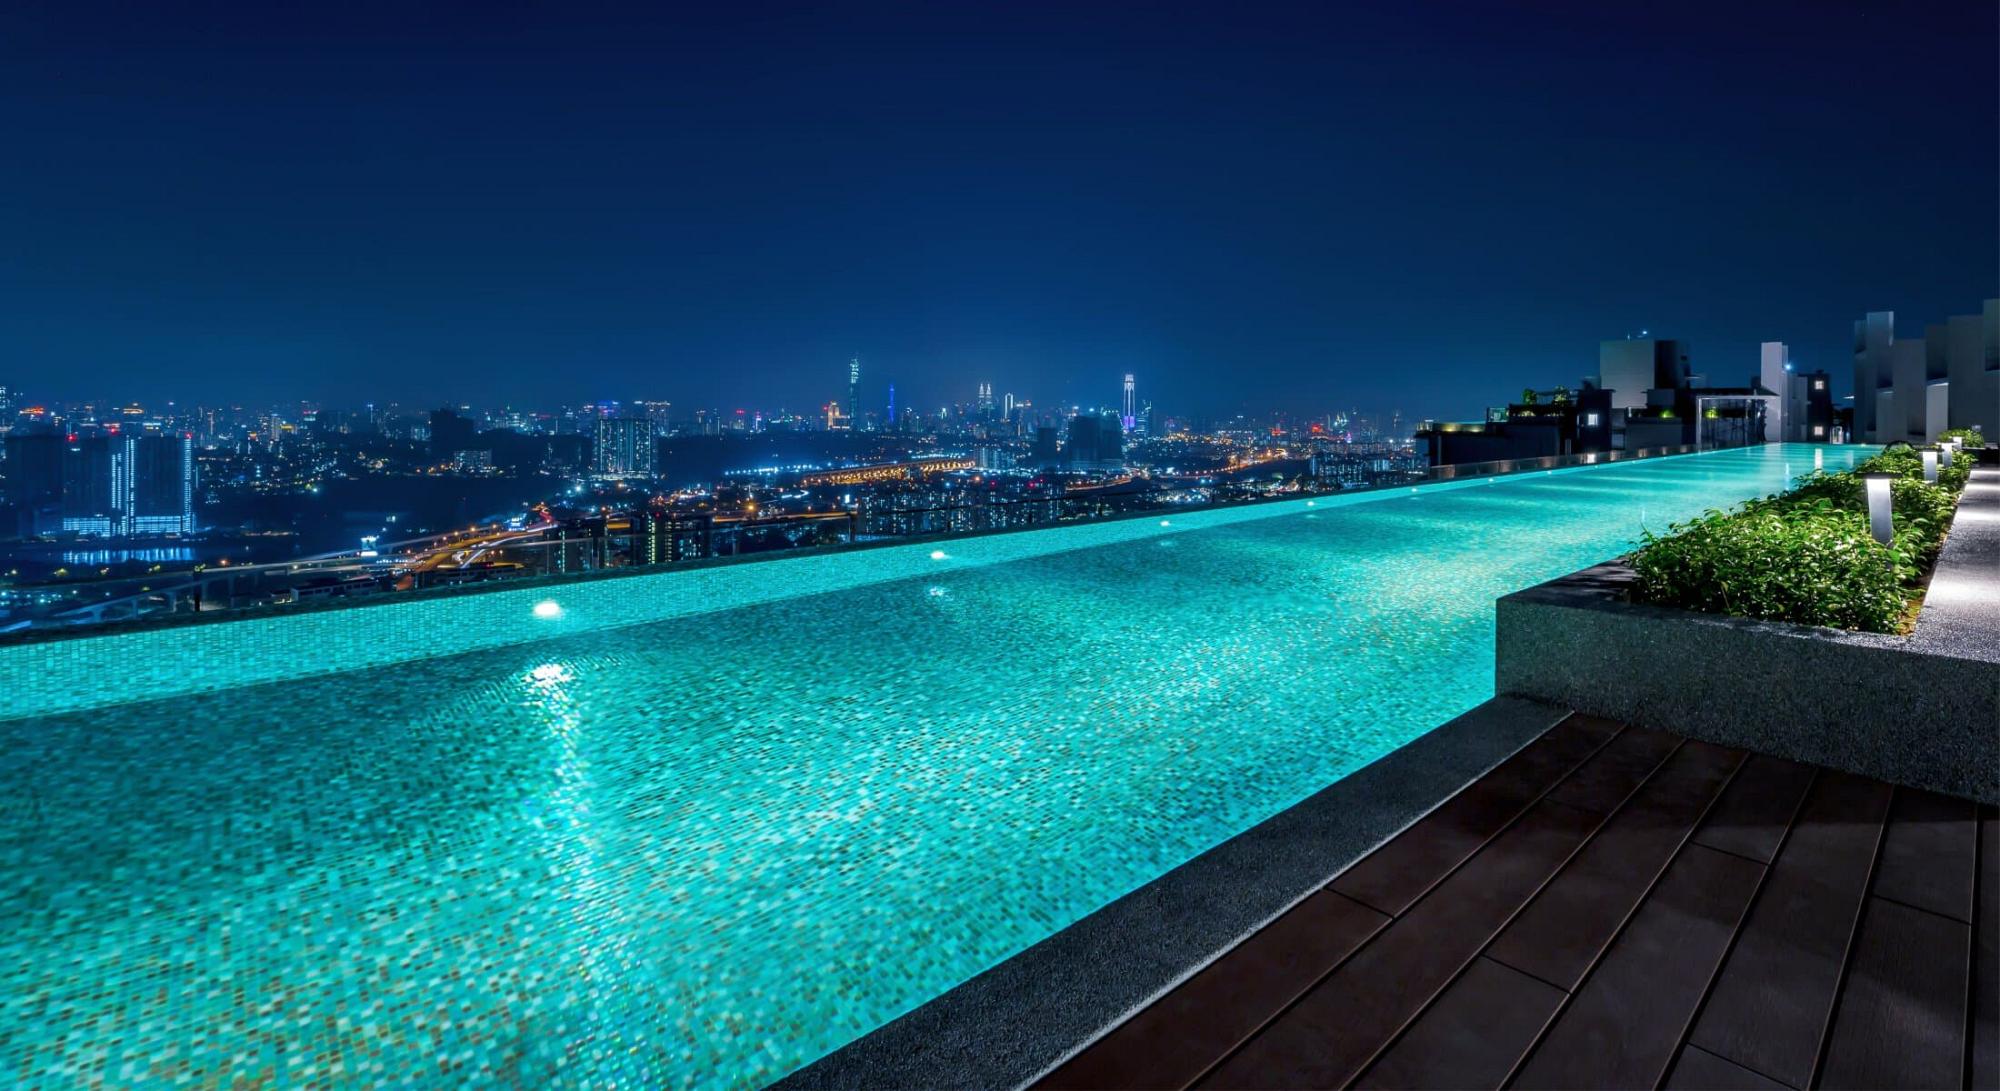 Infinity pool overlooking Los Angeles at night